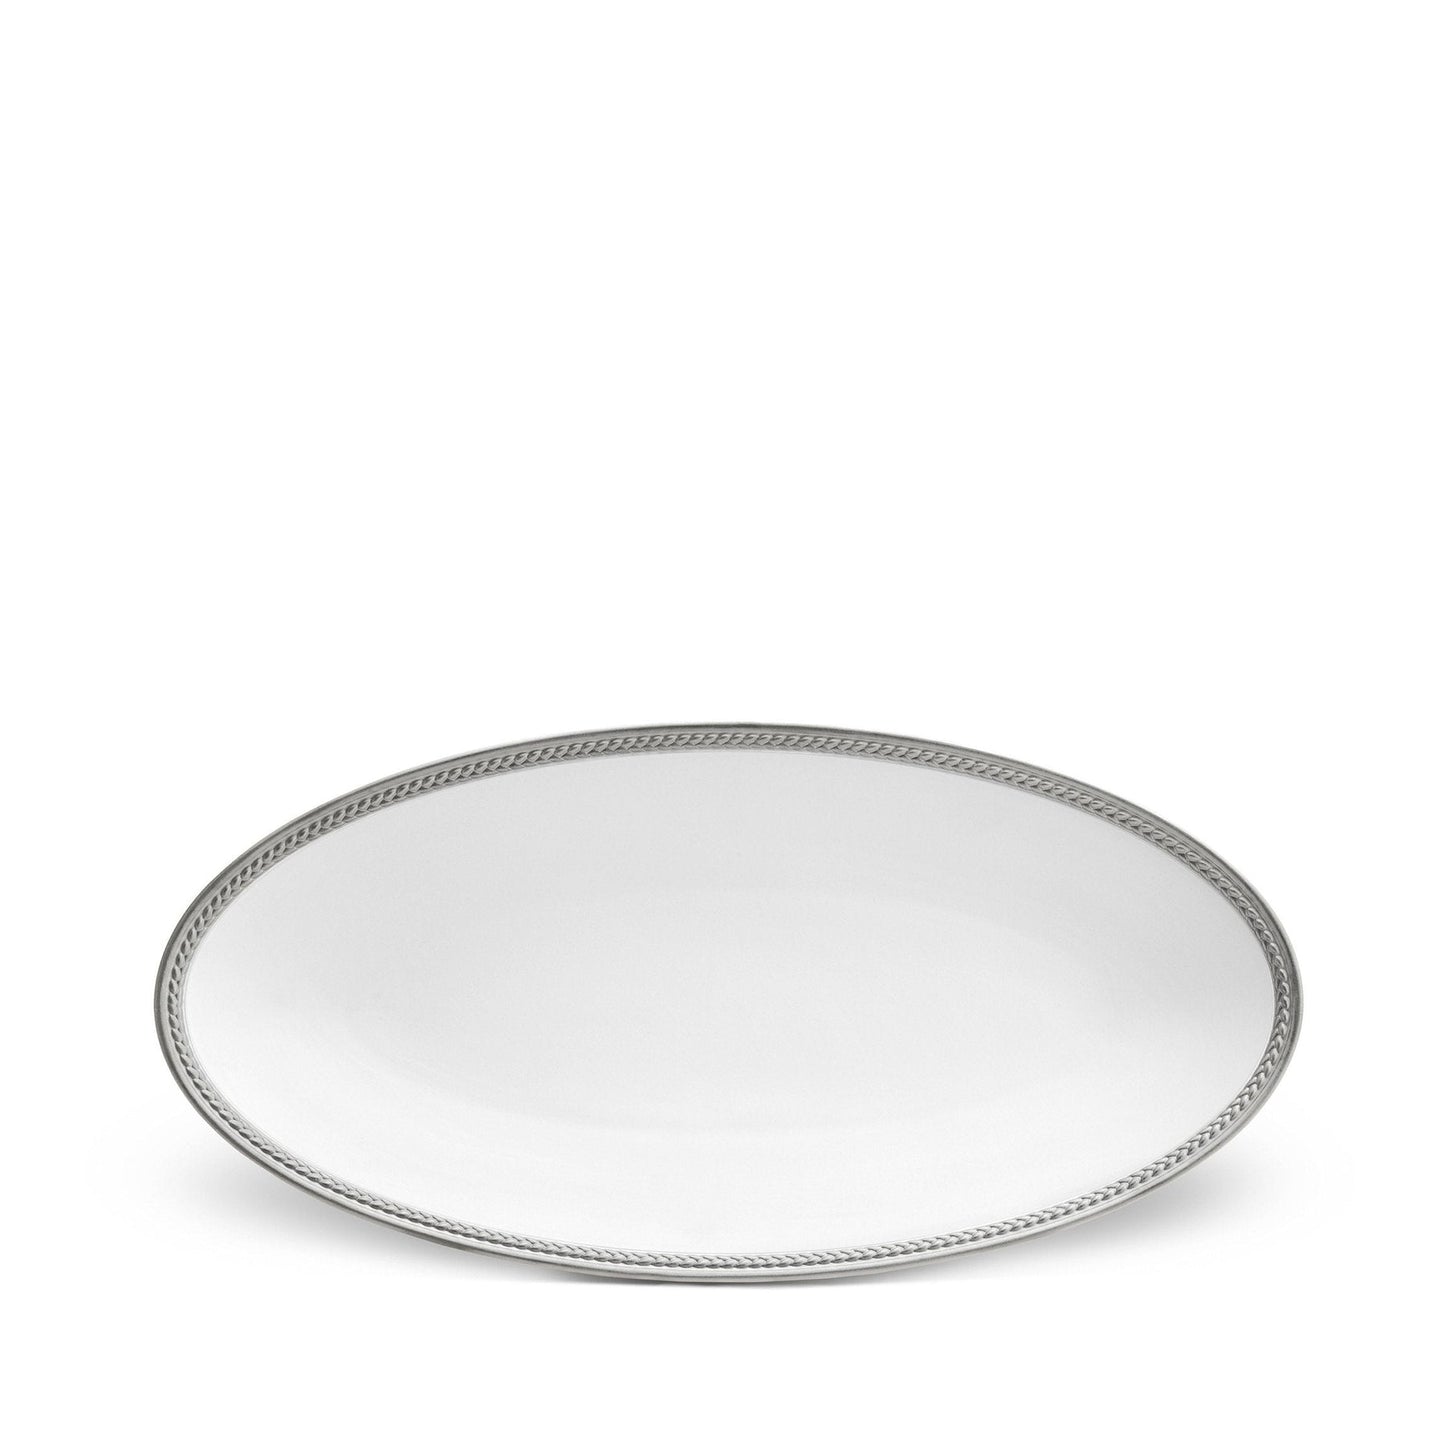 Soie Tressée Small Oval Platter - Platinum